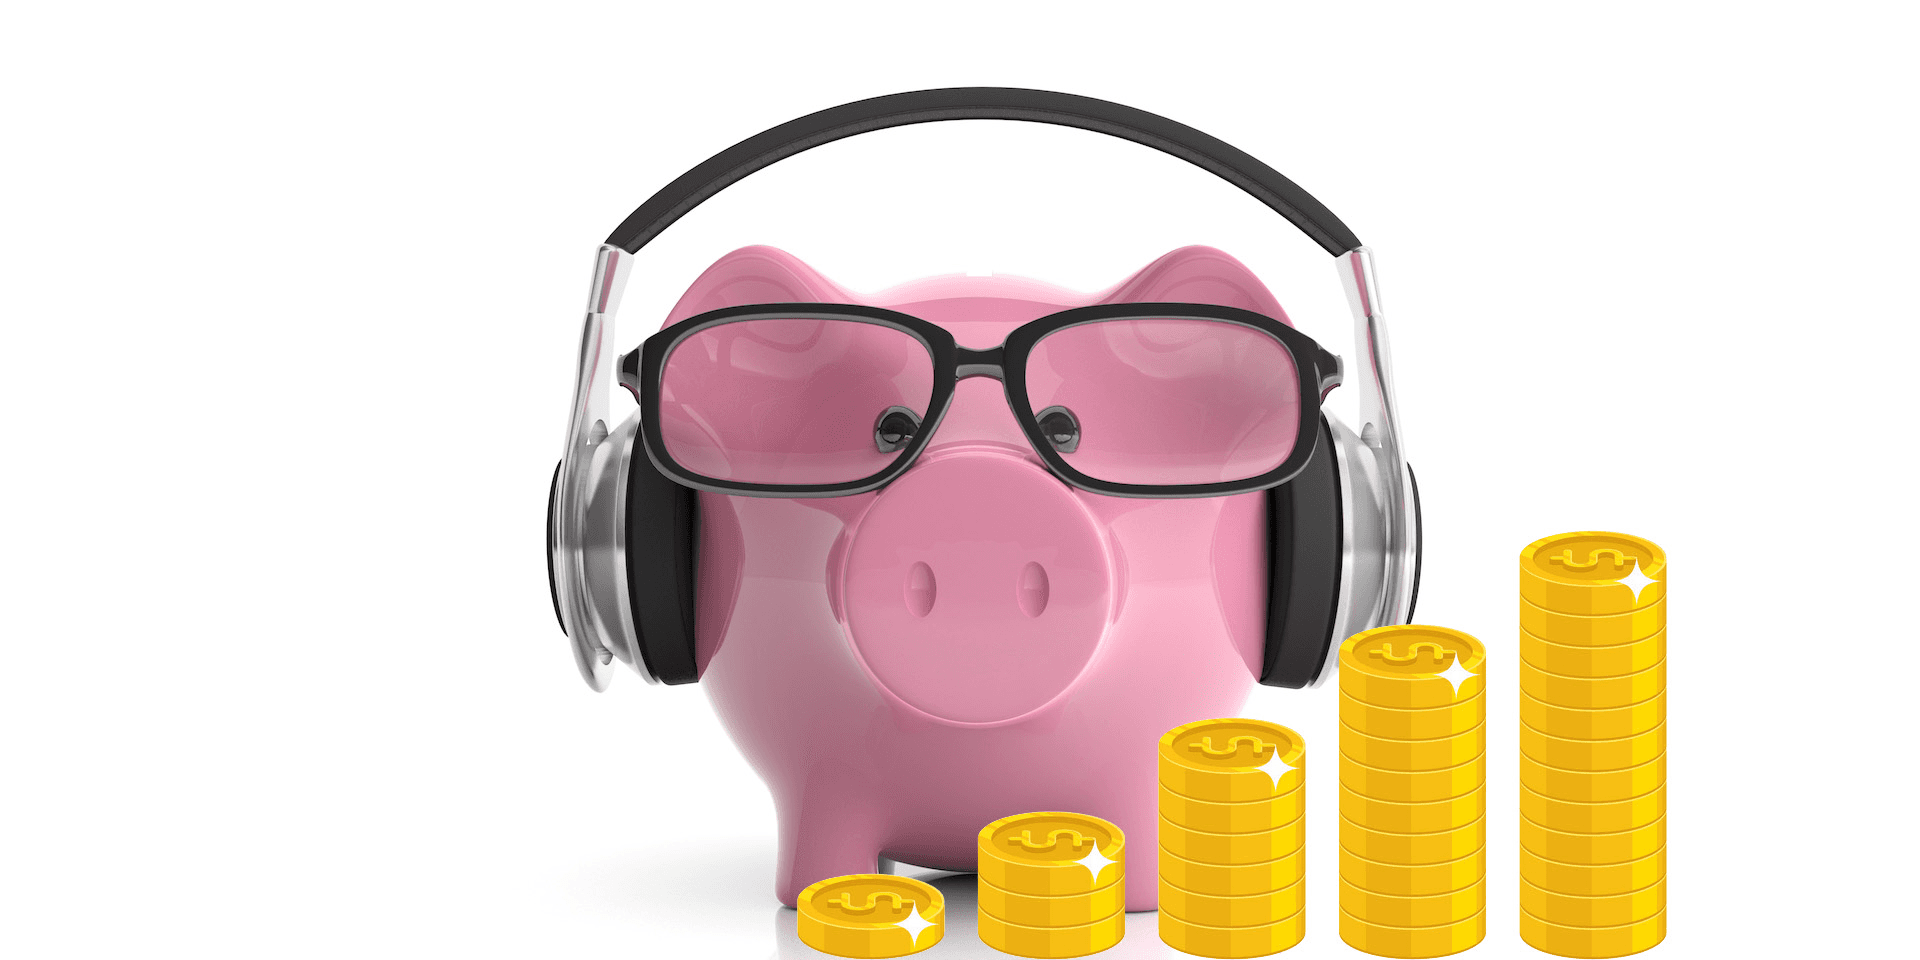 A piggy bank wearing headphones and saving money. 